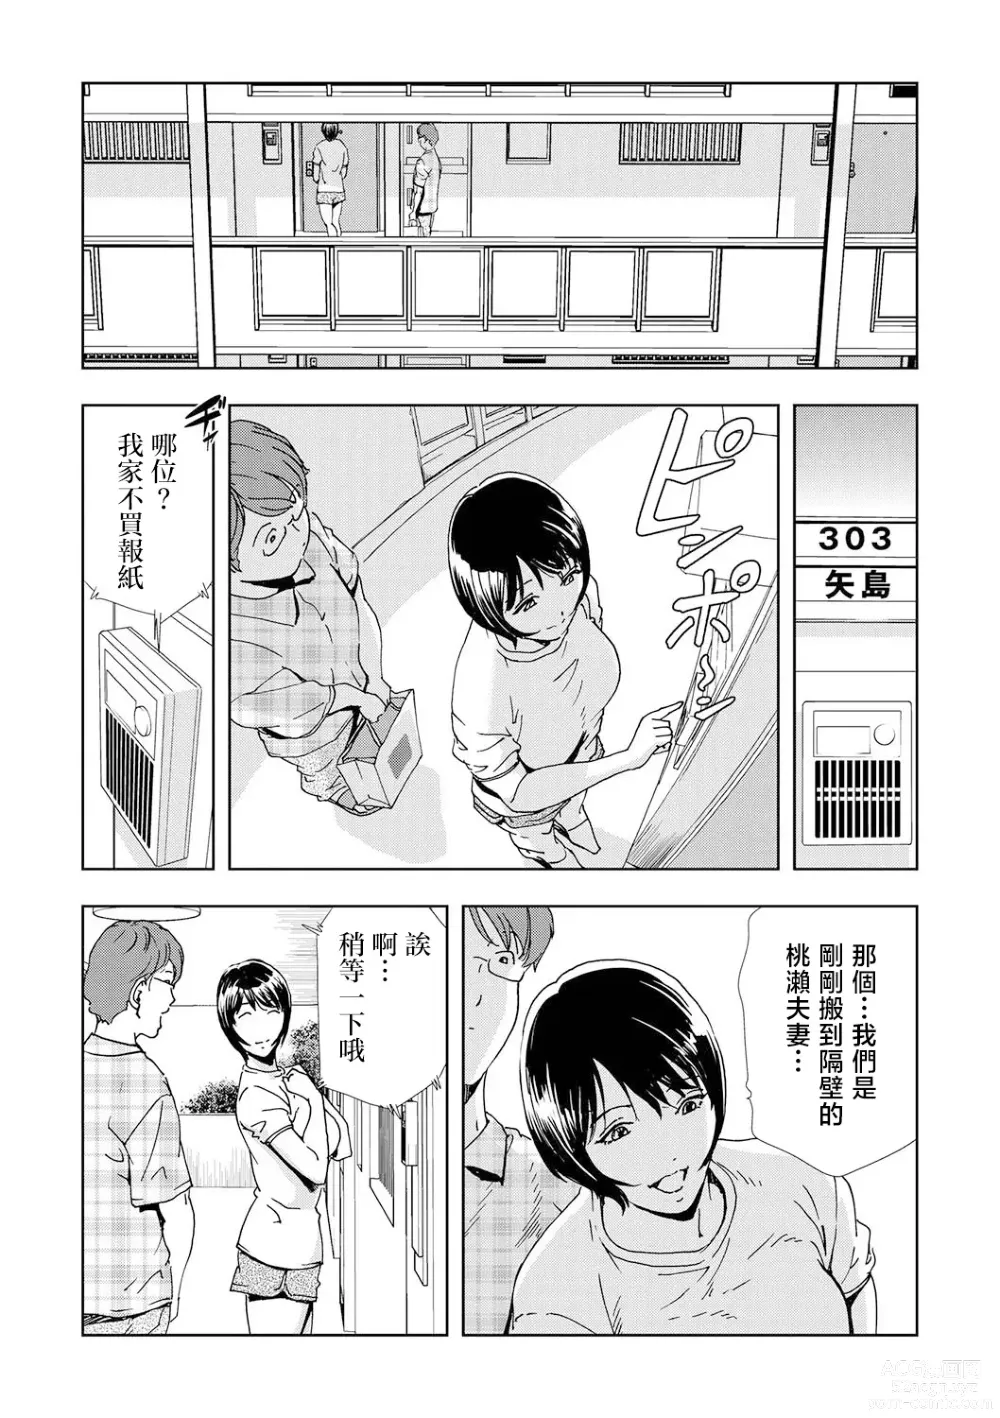 Page 4 of manga Netorare Vol.04